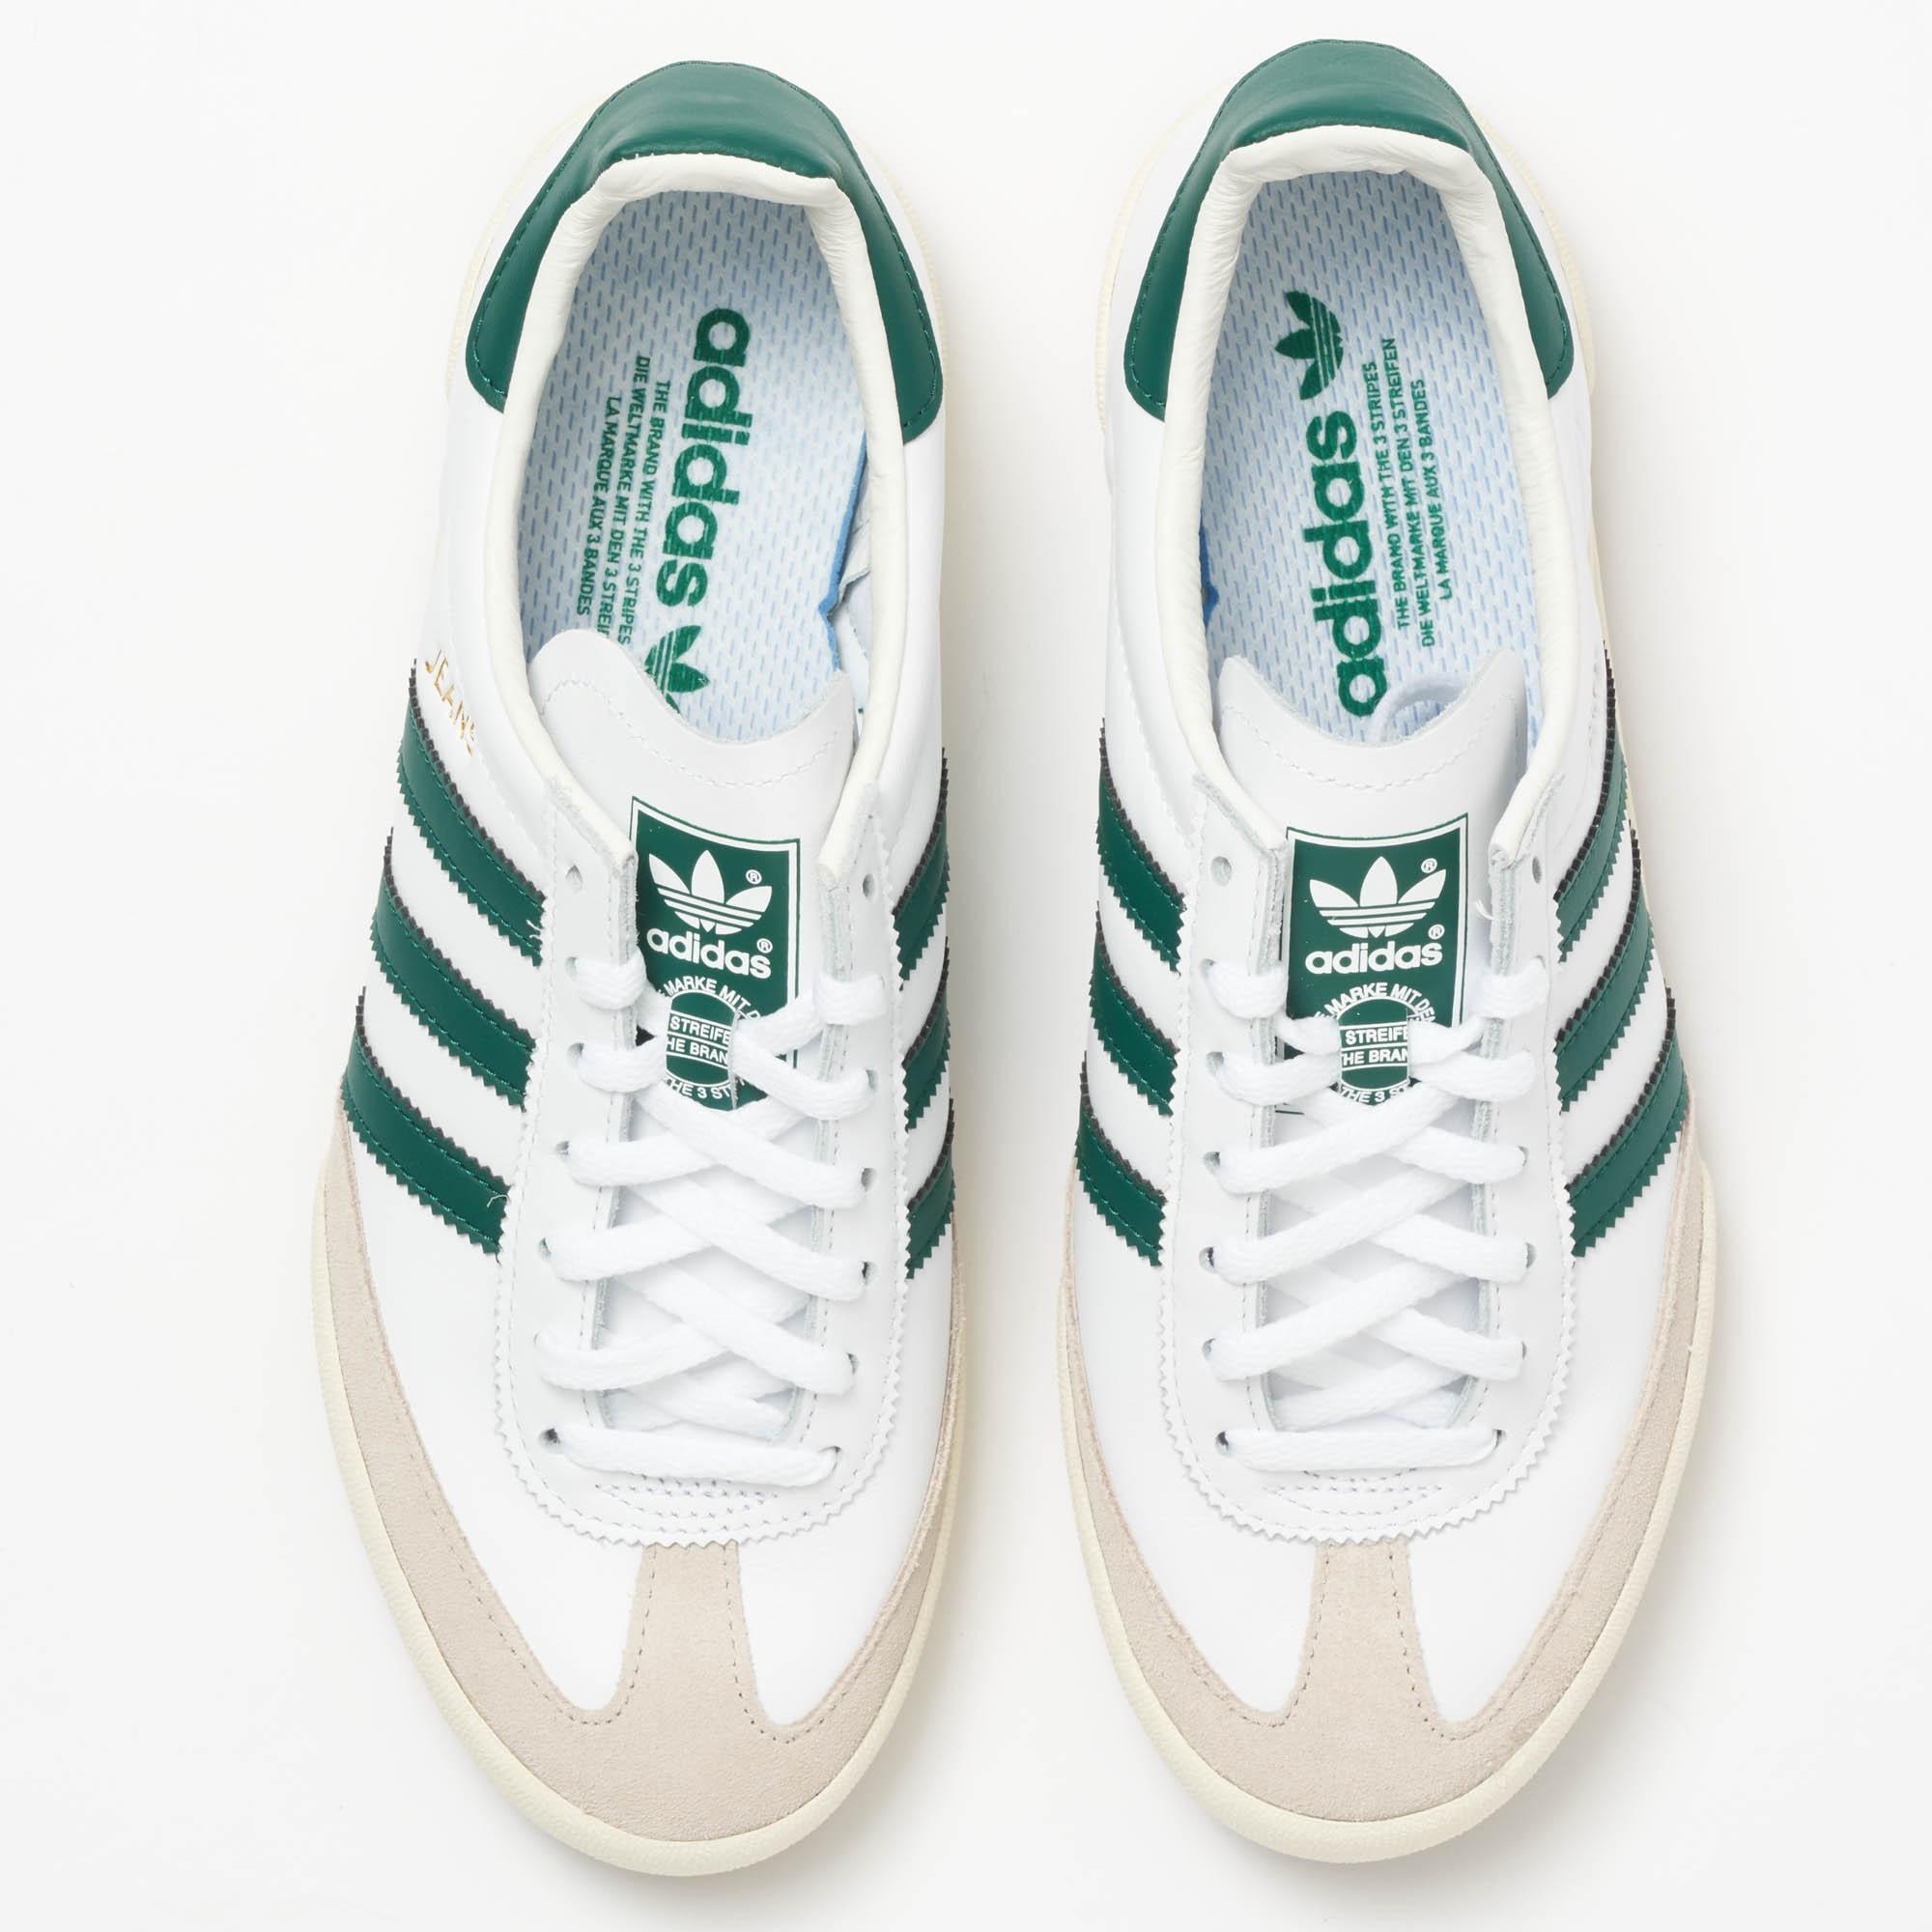 adidas white with green stripes